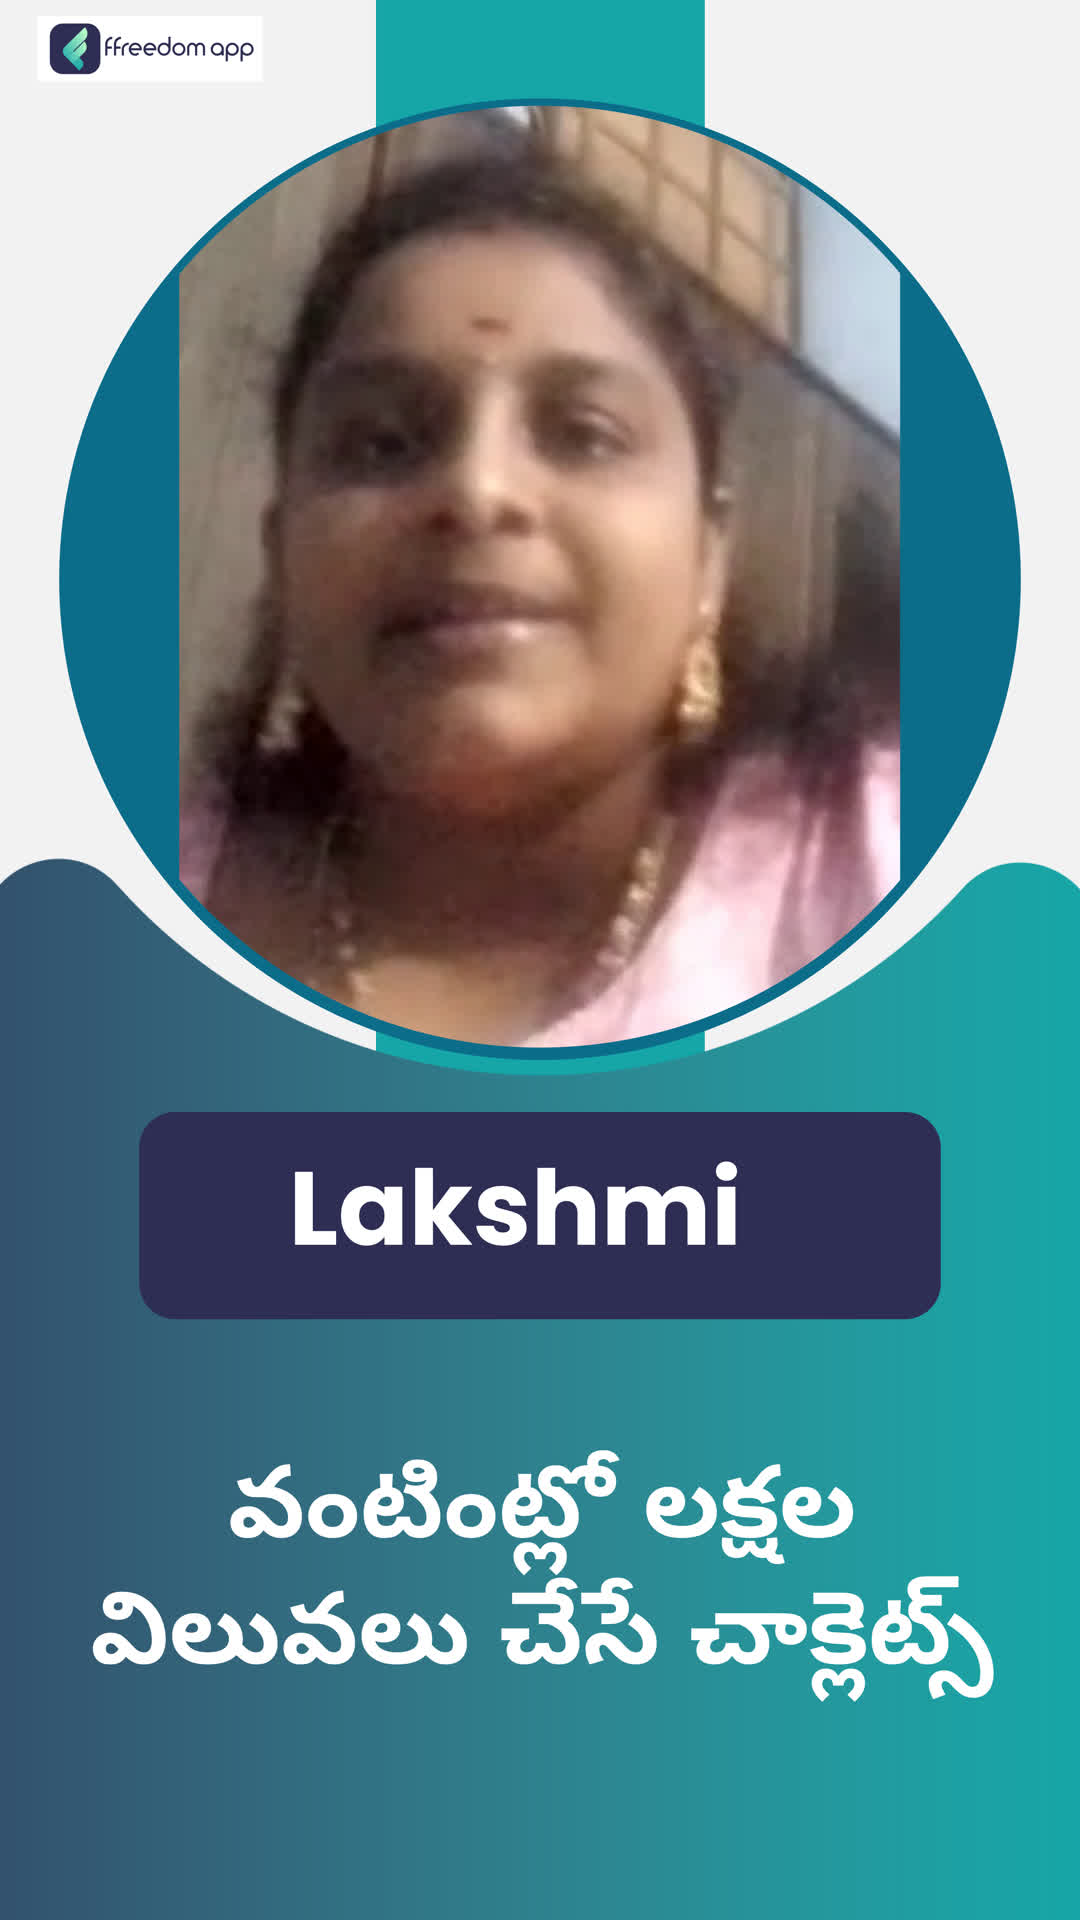 Lakashmi's Honest Review of ffreedom app - Mahbubnagar ,Telangana